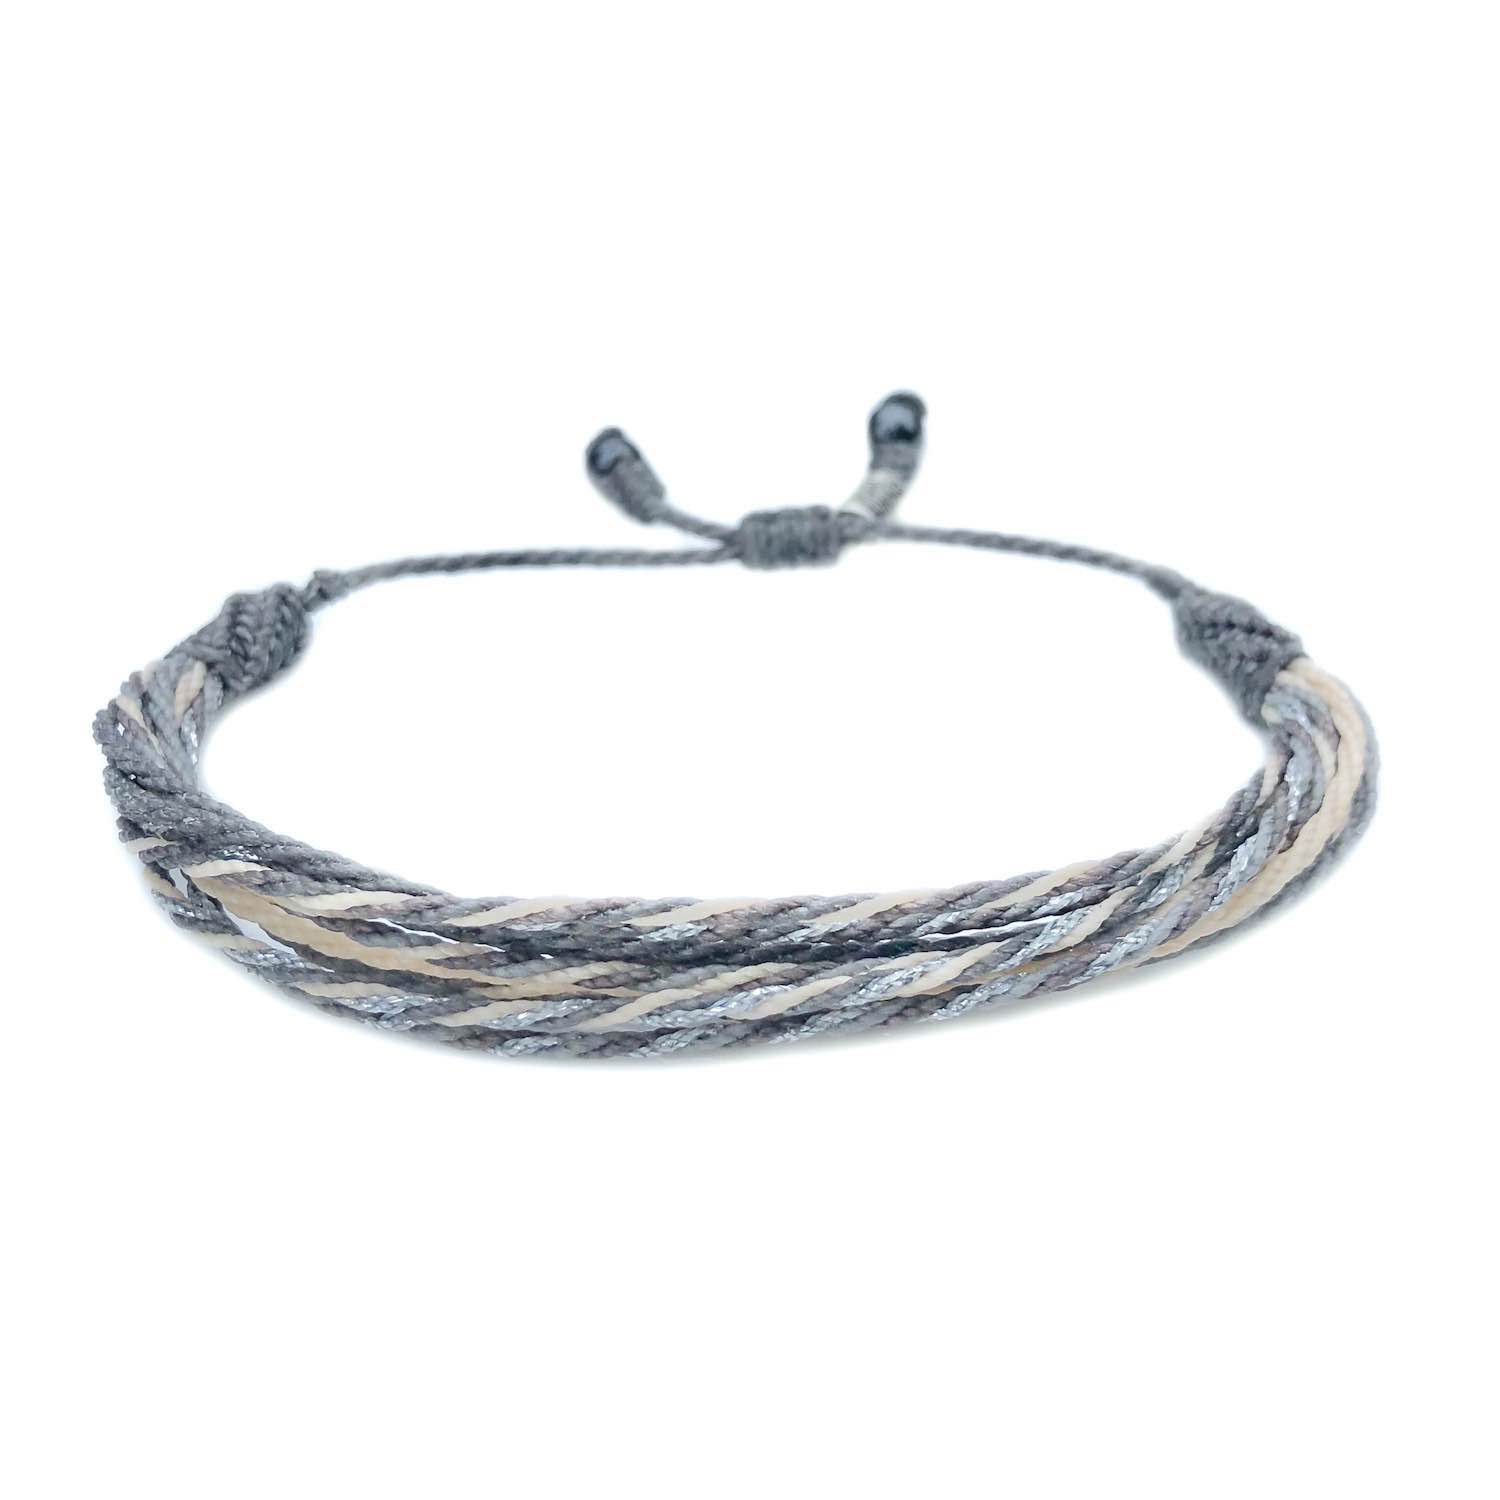 Twisted Rope Bracelet Silver Gray White | RUMI SUMAQ Nautical Sailor Rope Bracelets | Handmade on Martha's Vineyard by Designer Coco Paniora Salinas